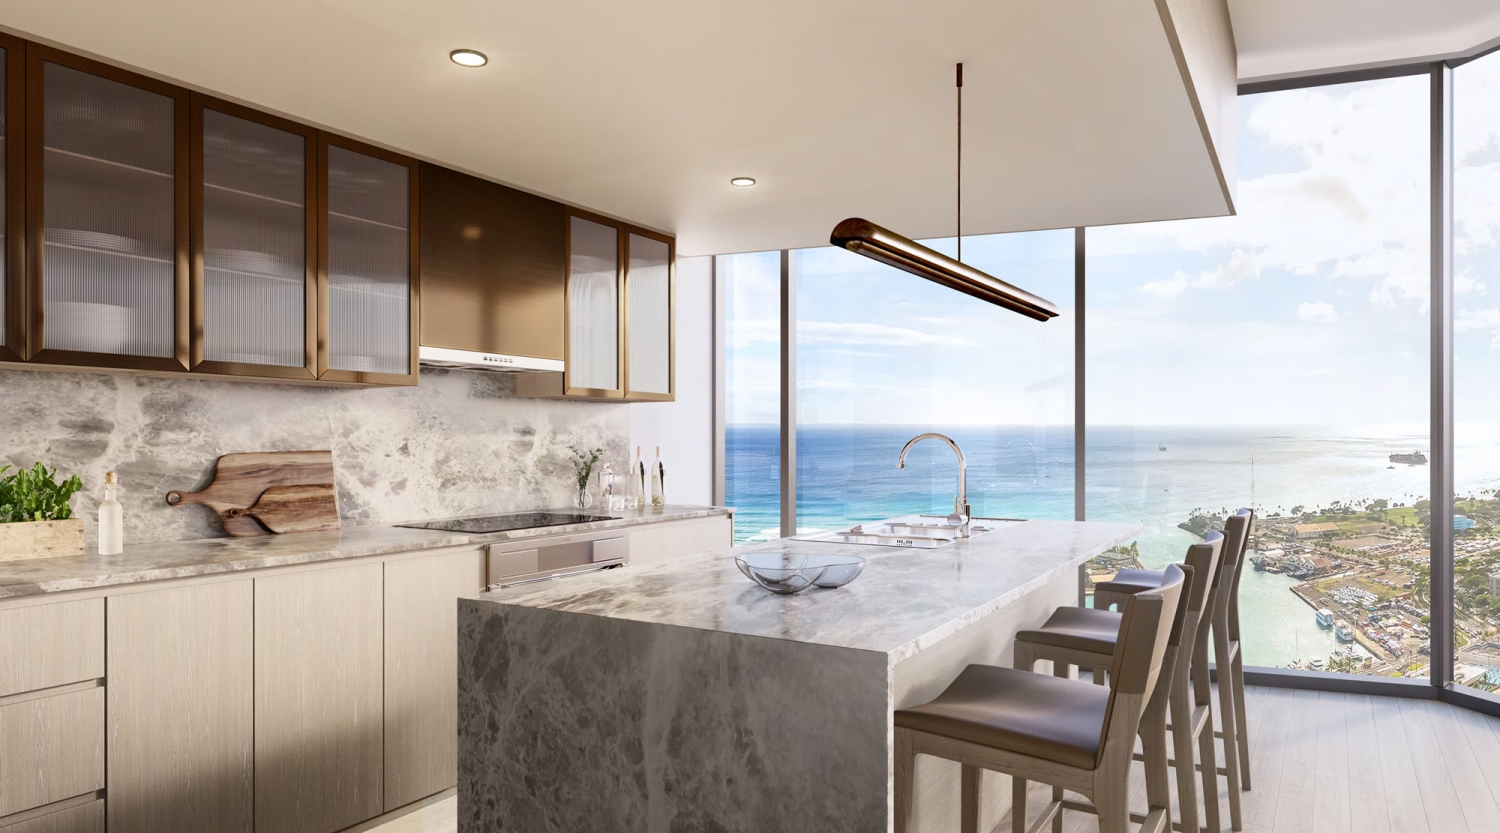 Koula kitchen with ocean views